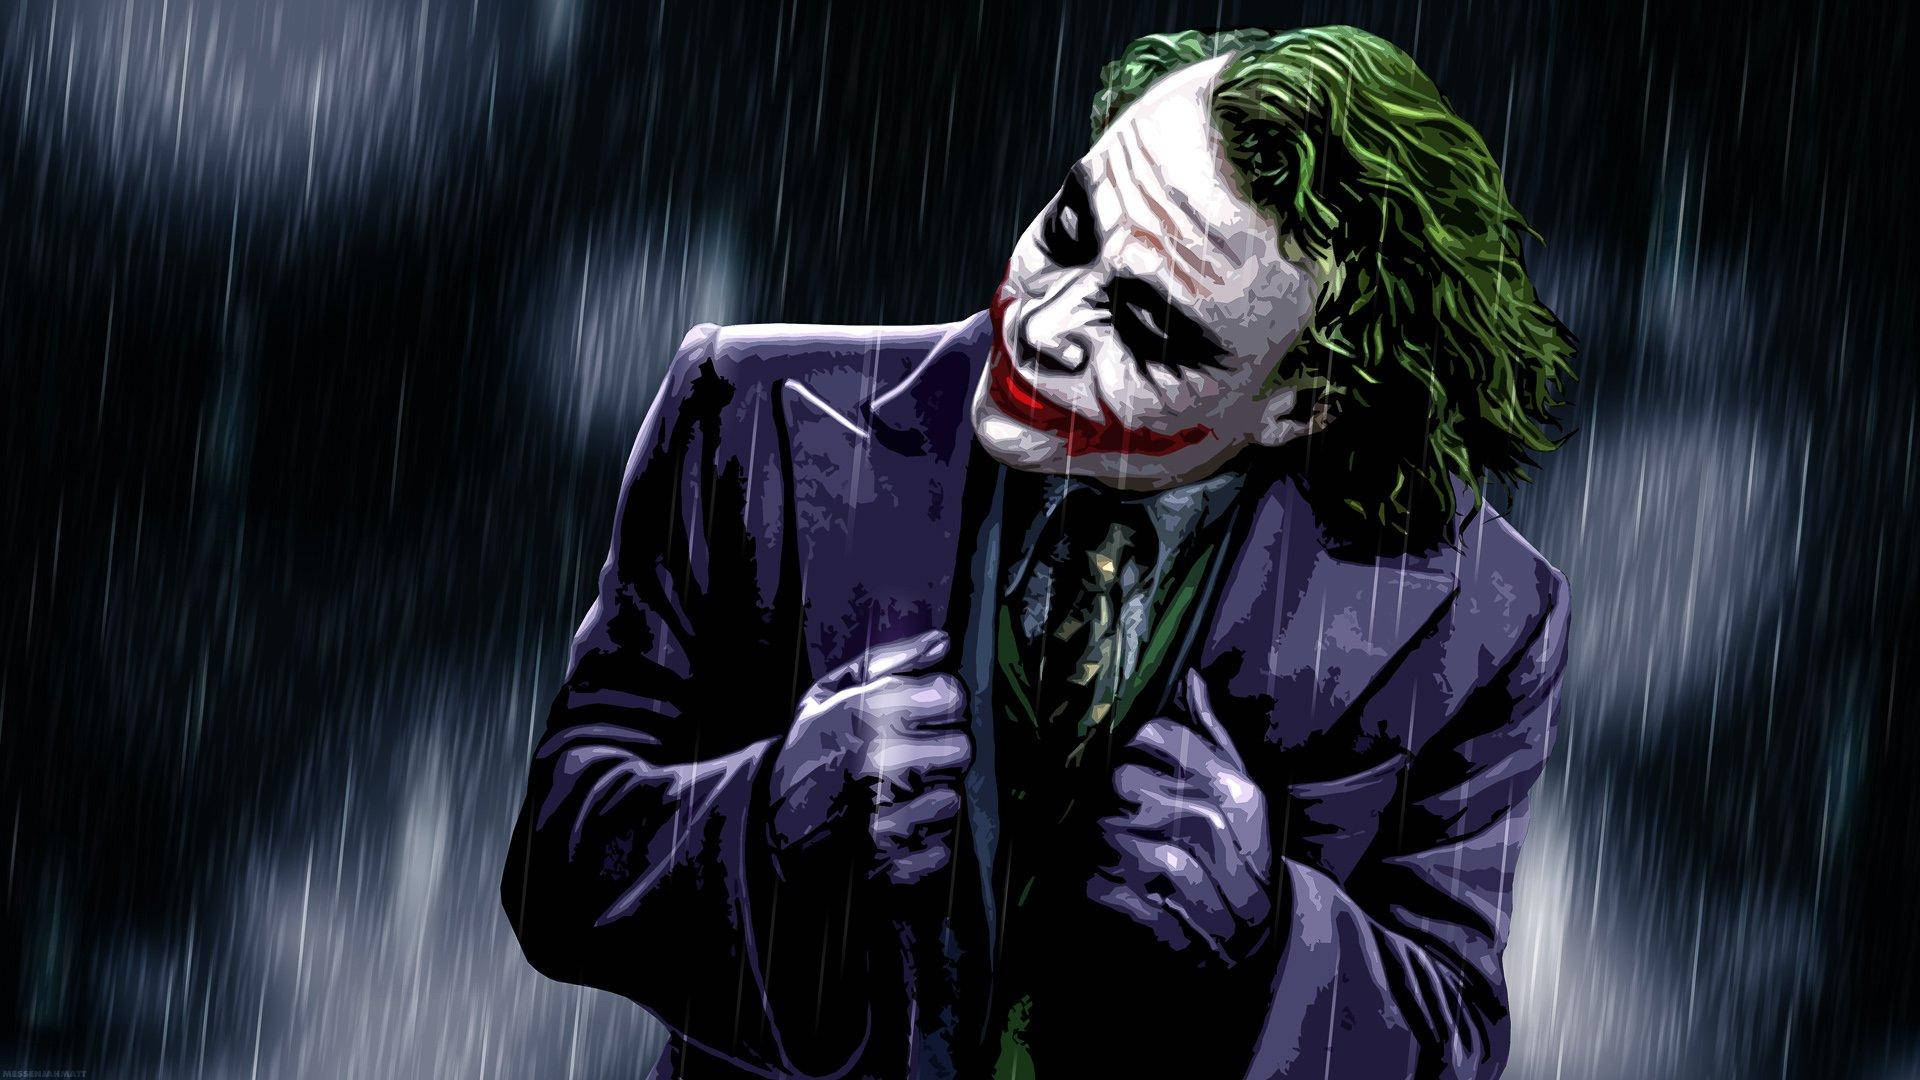 Joker Under Rain 4k Ultra Hd Wallpaper